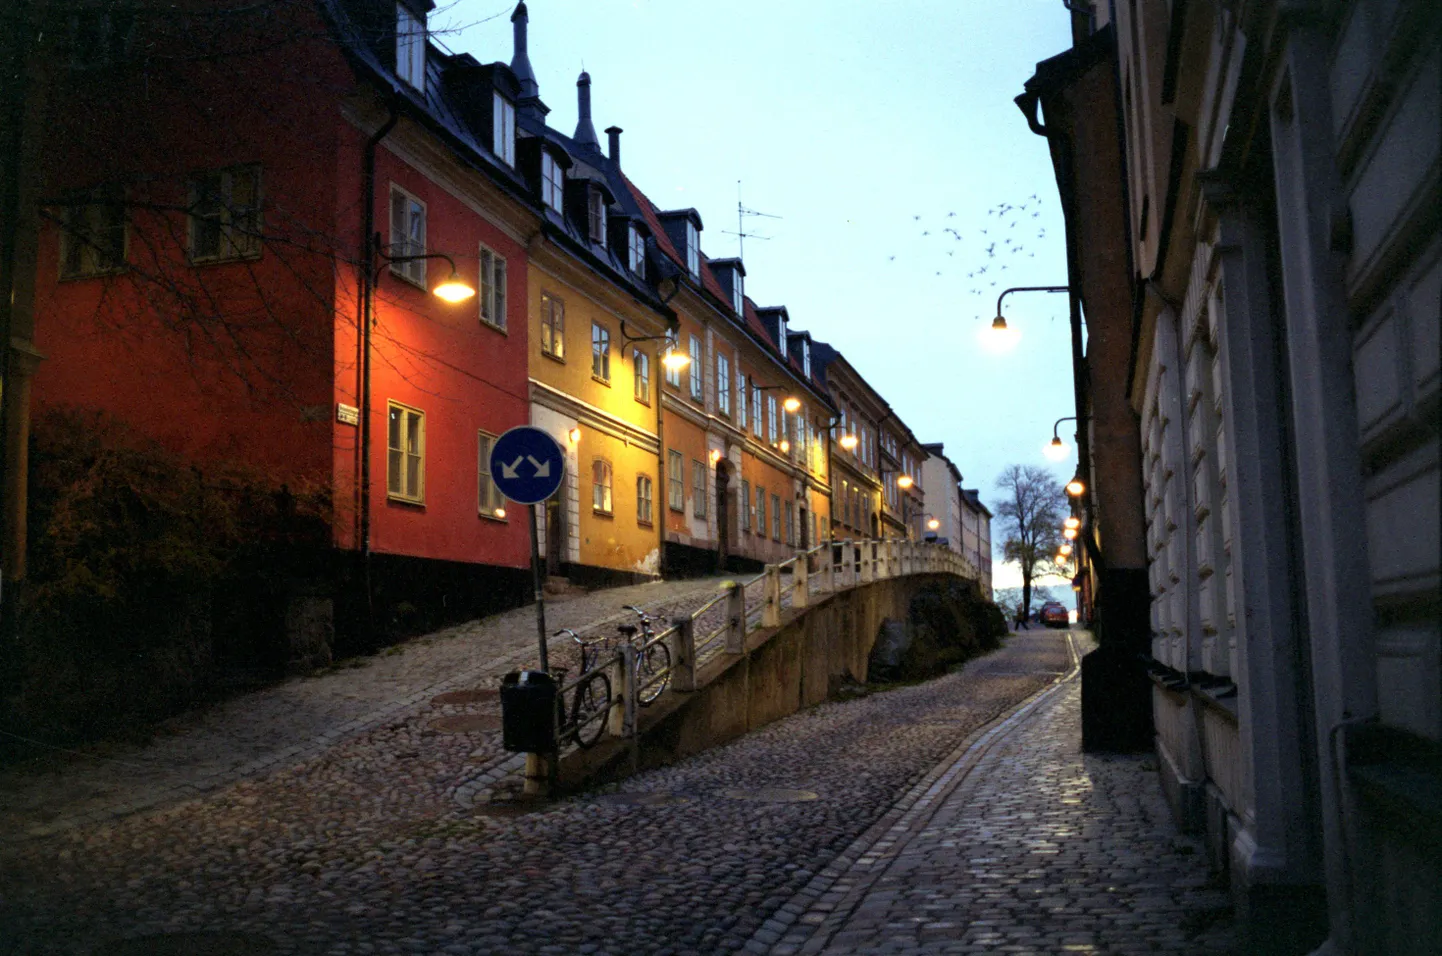 Brannkyrkagatan Stockholmis Södermalmi linnaosas.